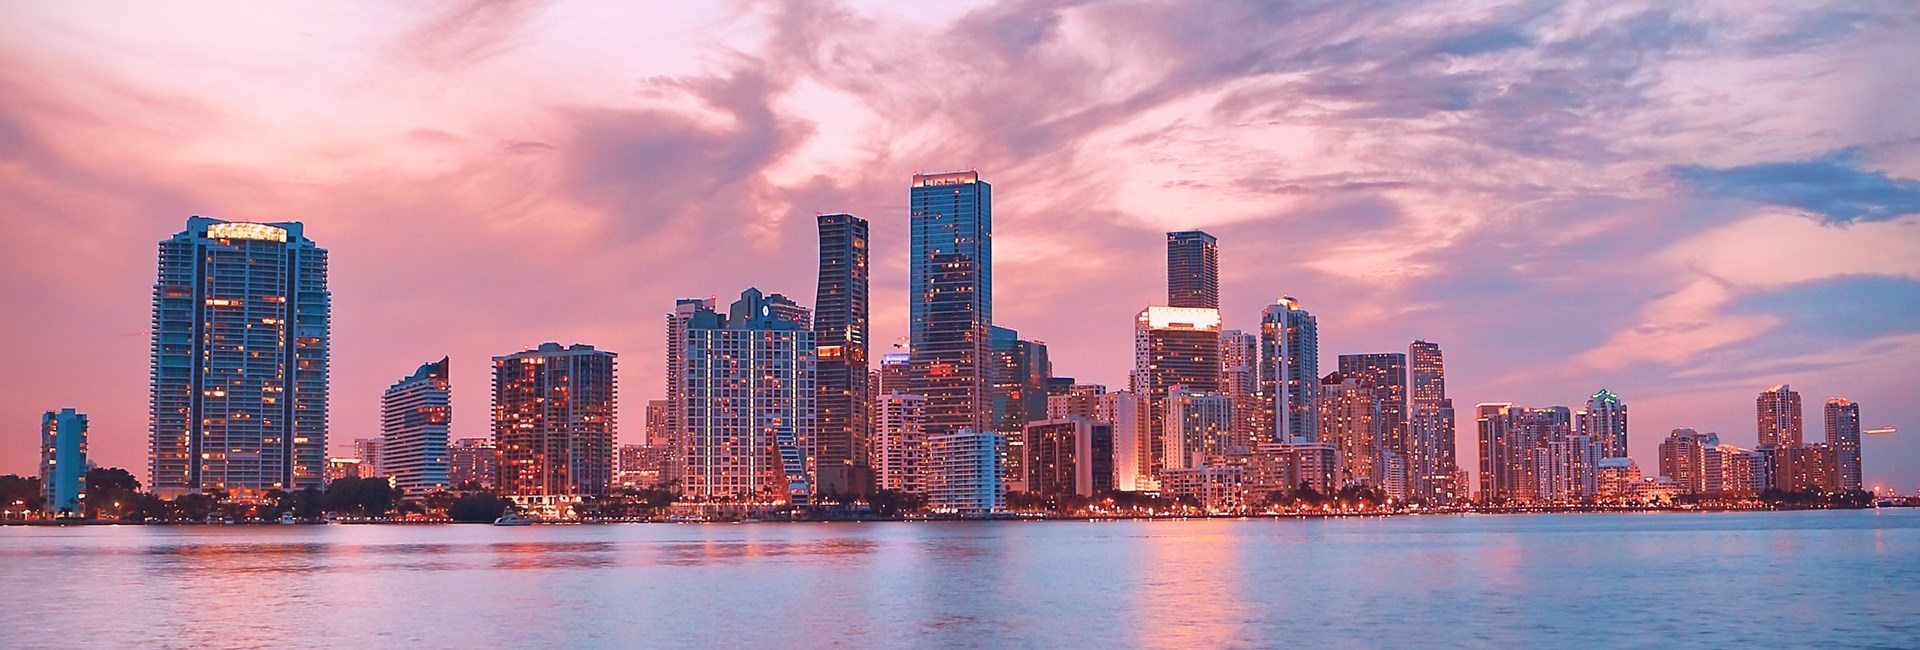 Miami skyline in the sunset